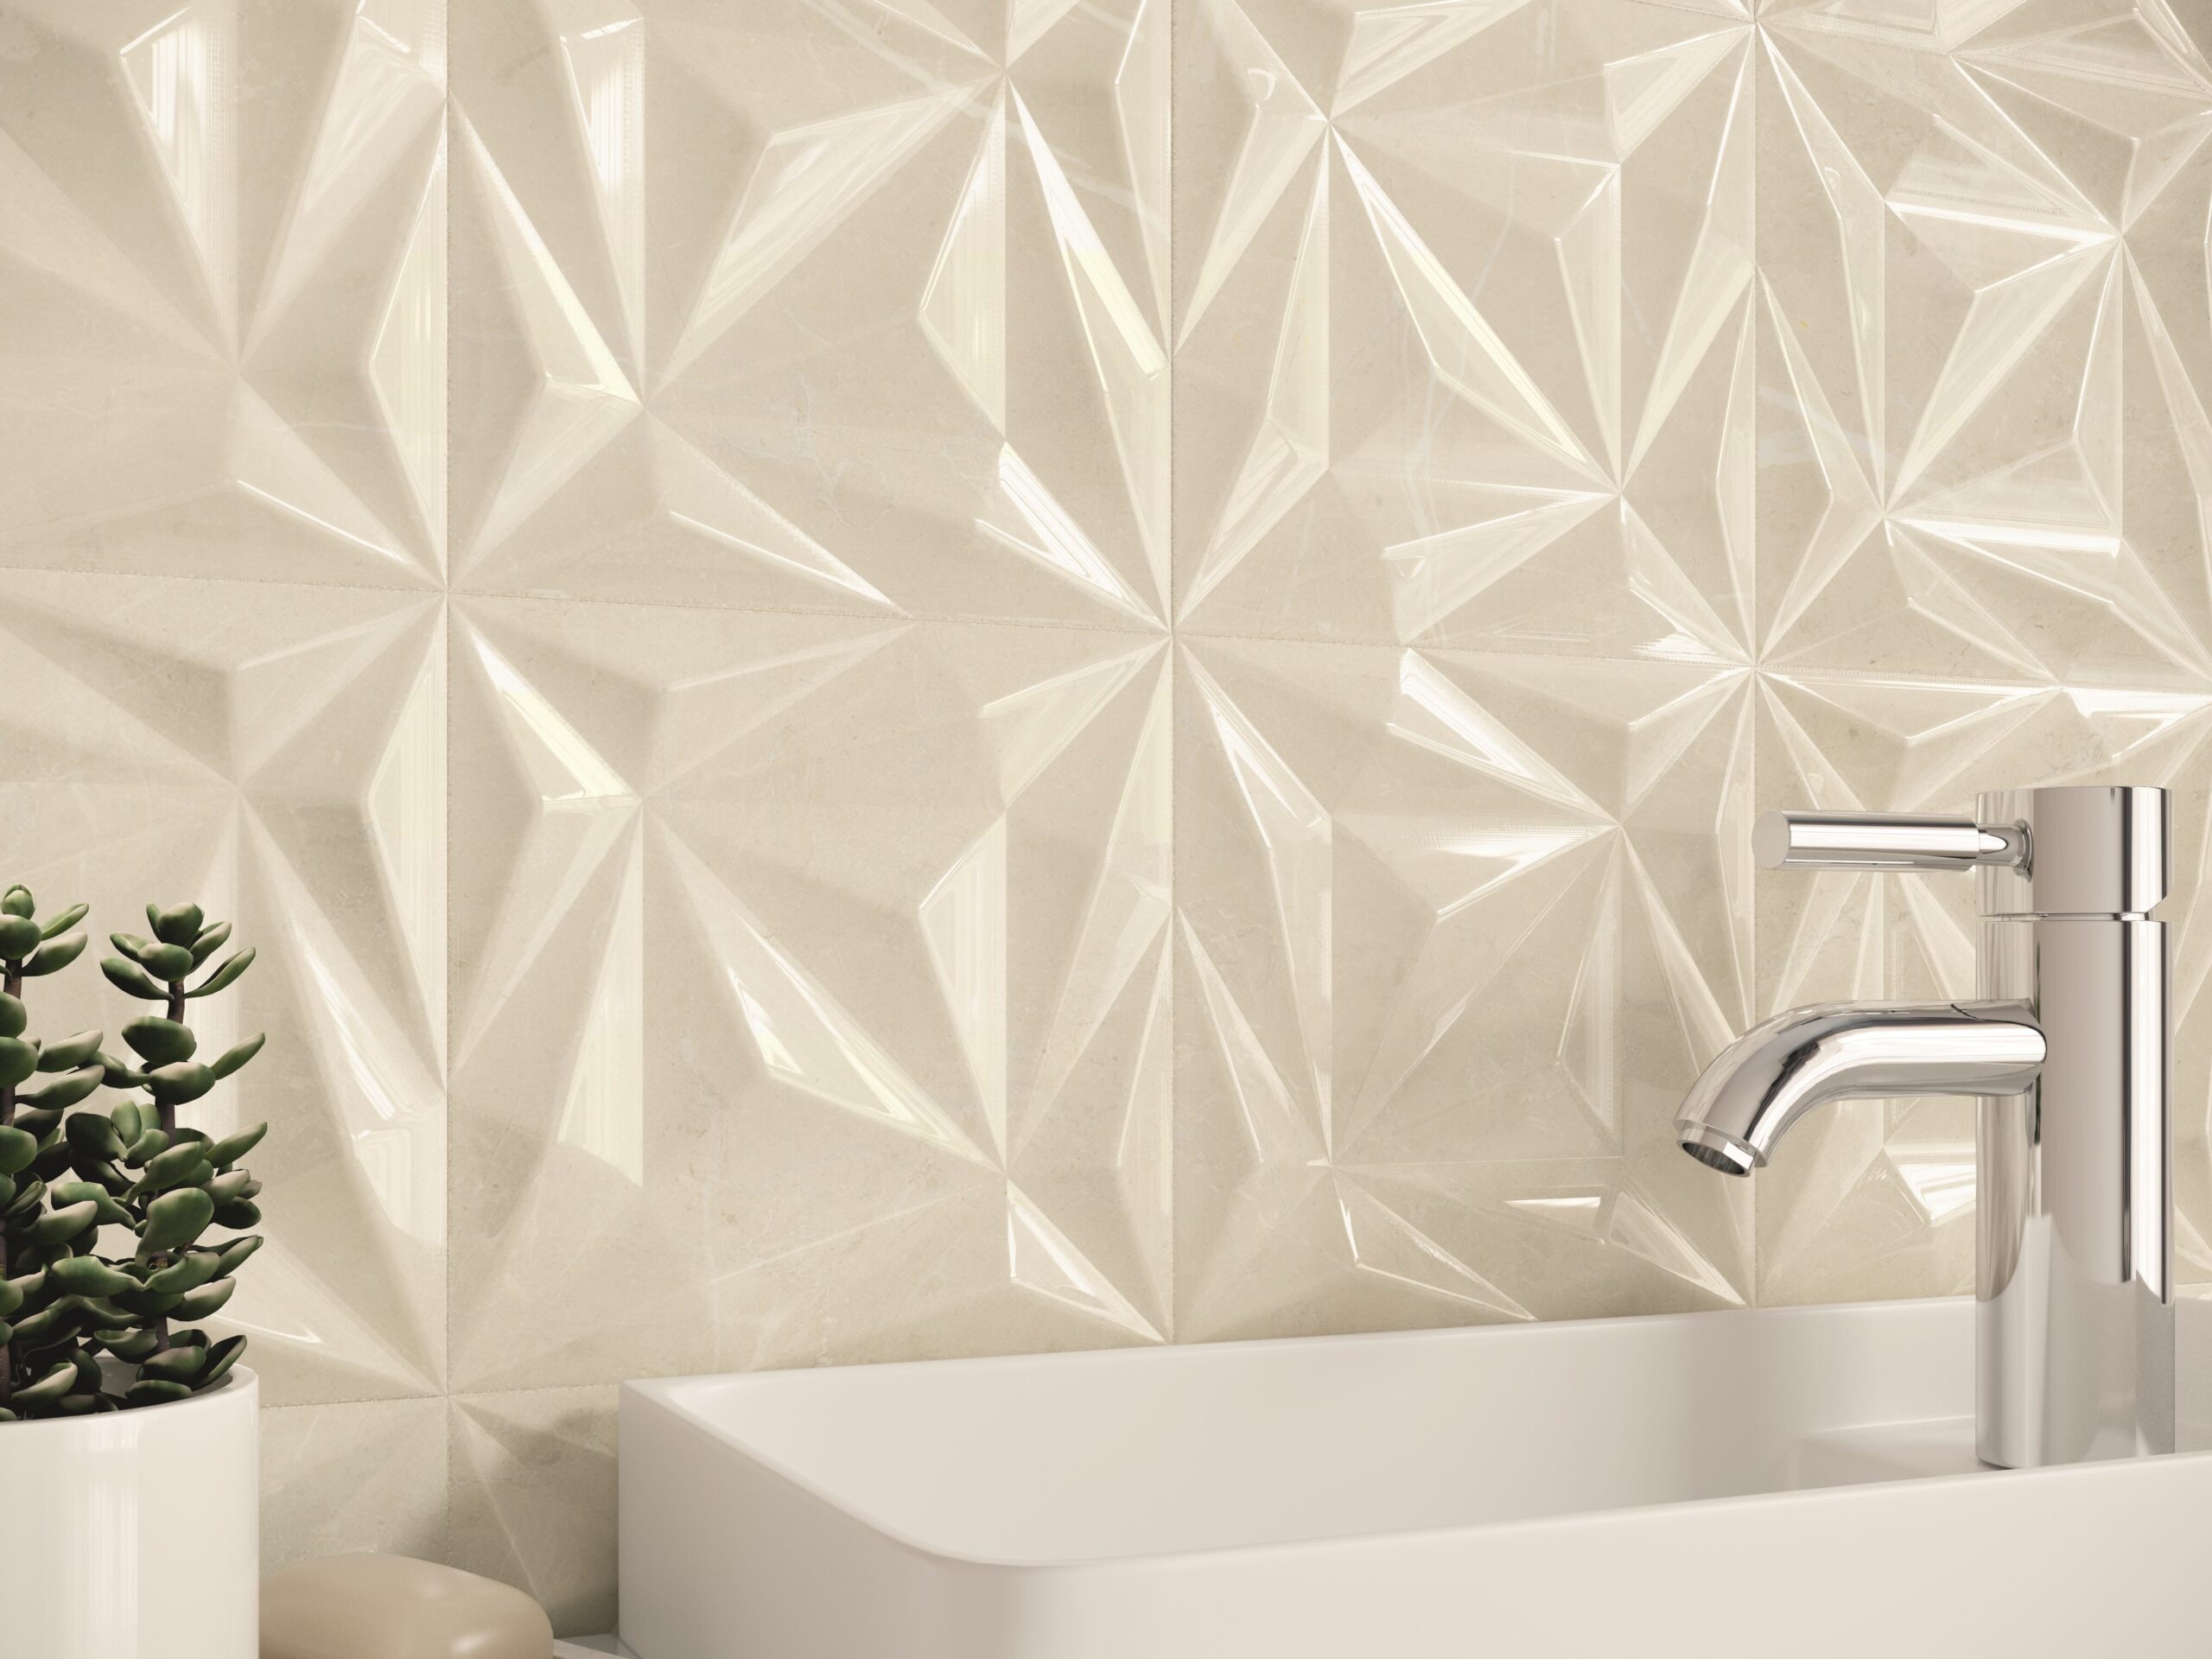 Bathroom Tiles The Best Marble, Bathroom Tile Designs 2021